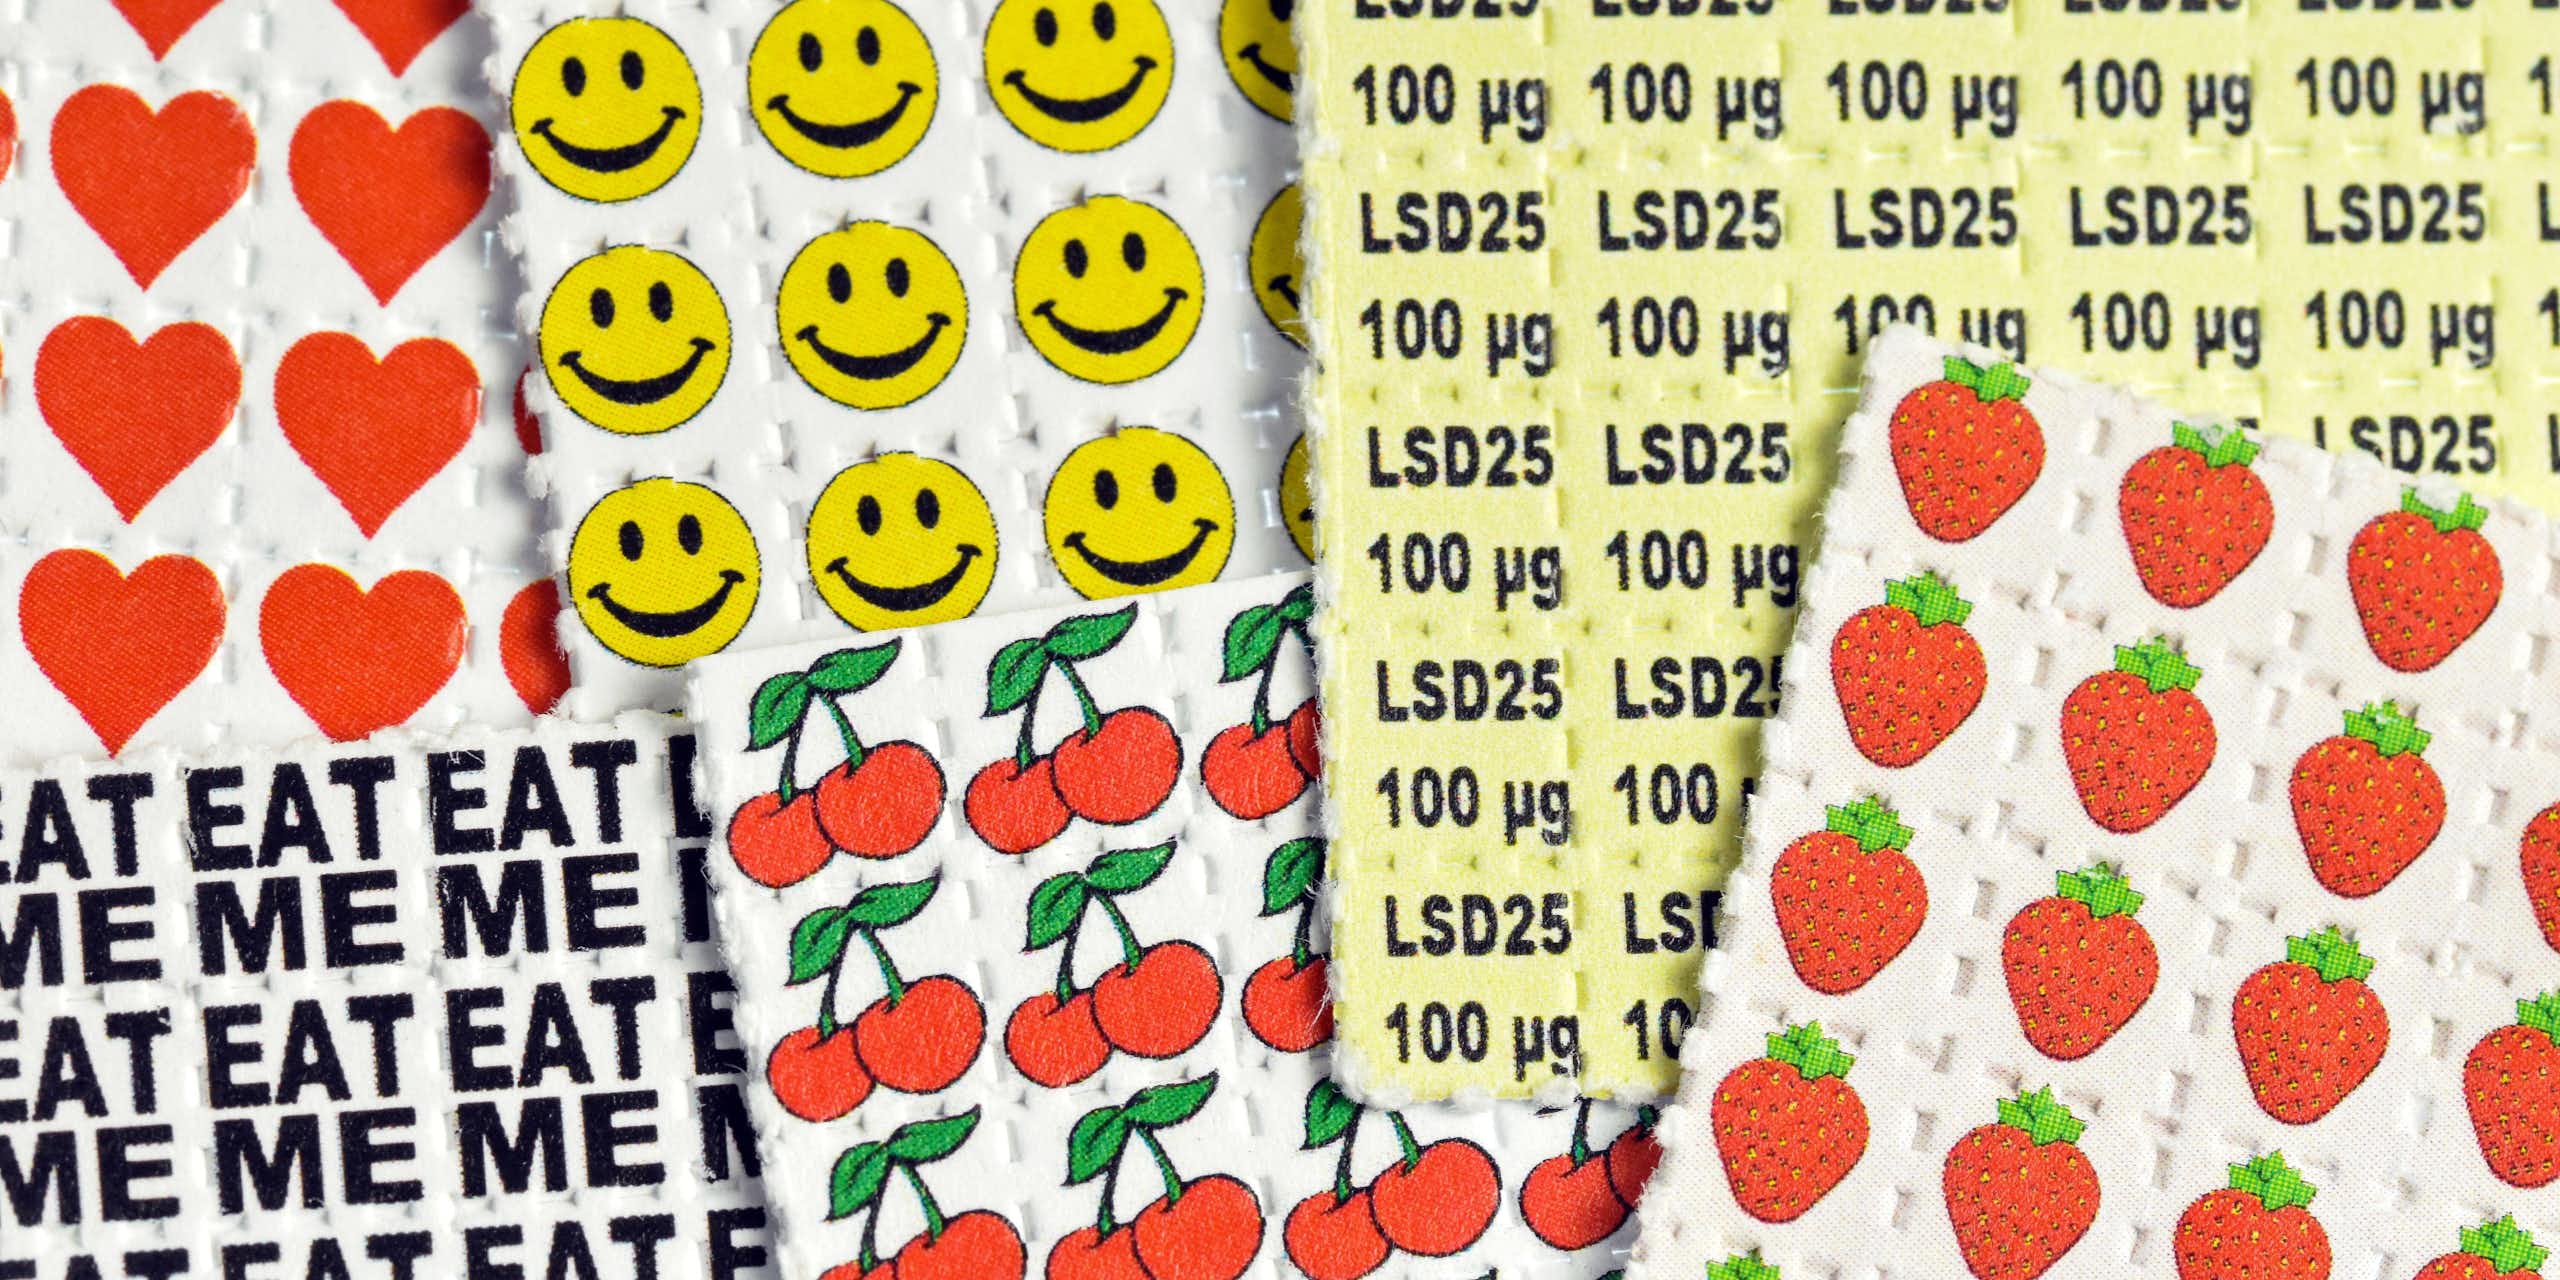 Sheets of LSD blotters